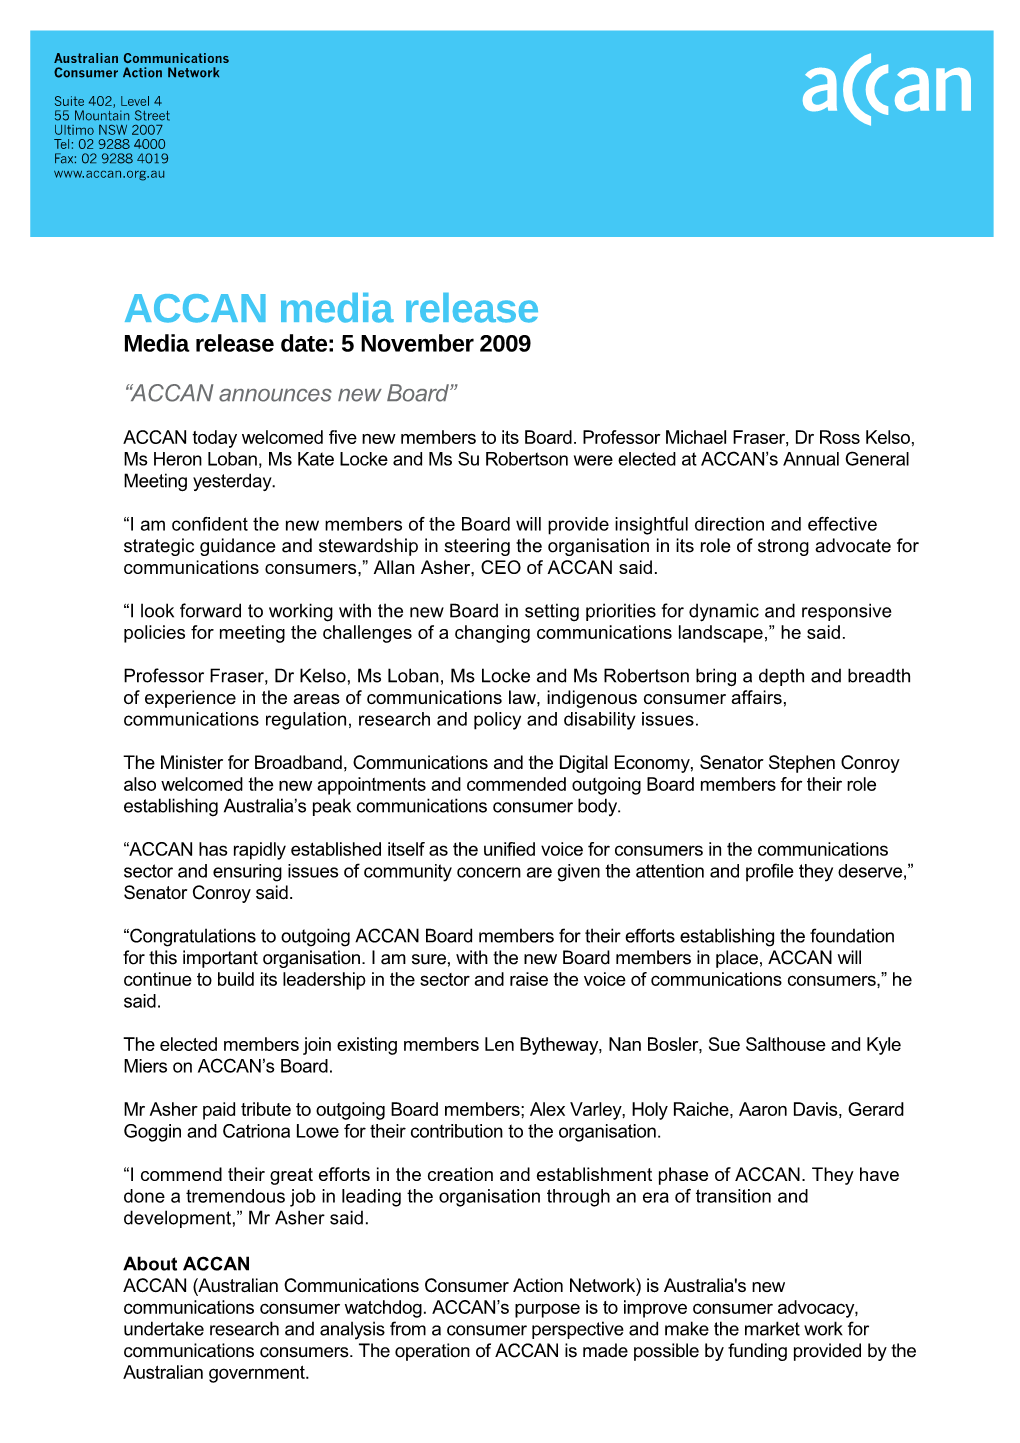 ACCAN Announces New Board